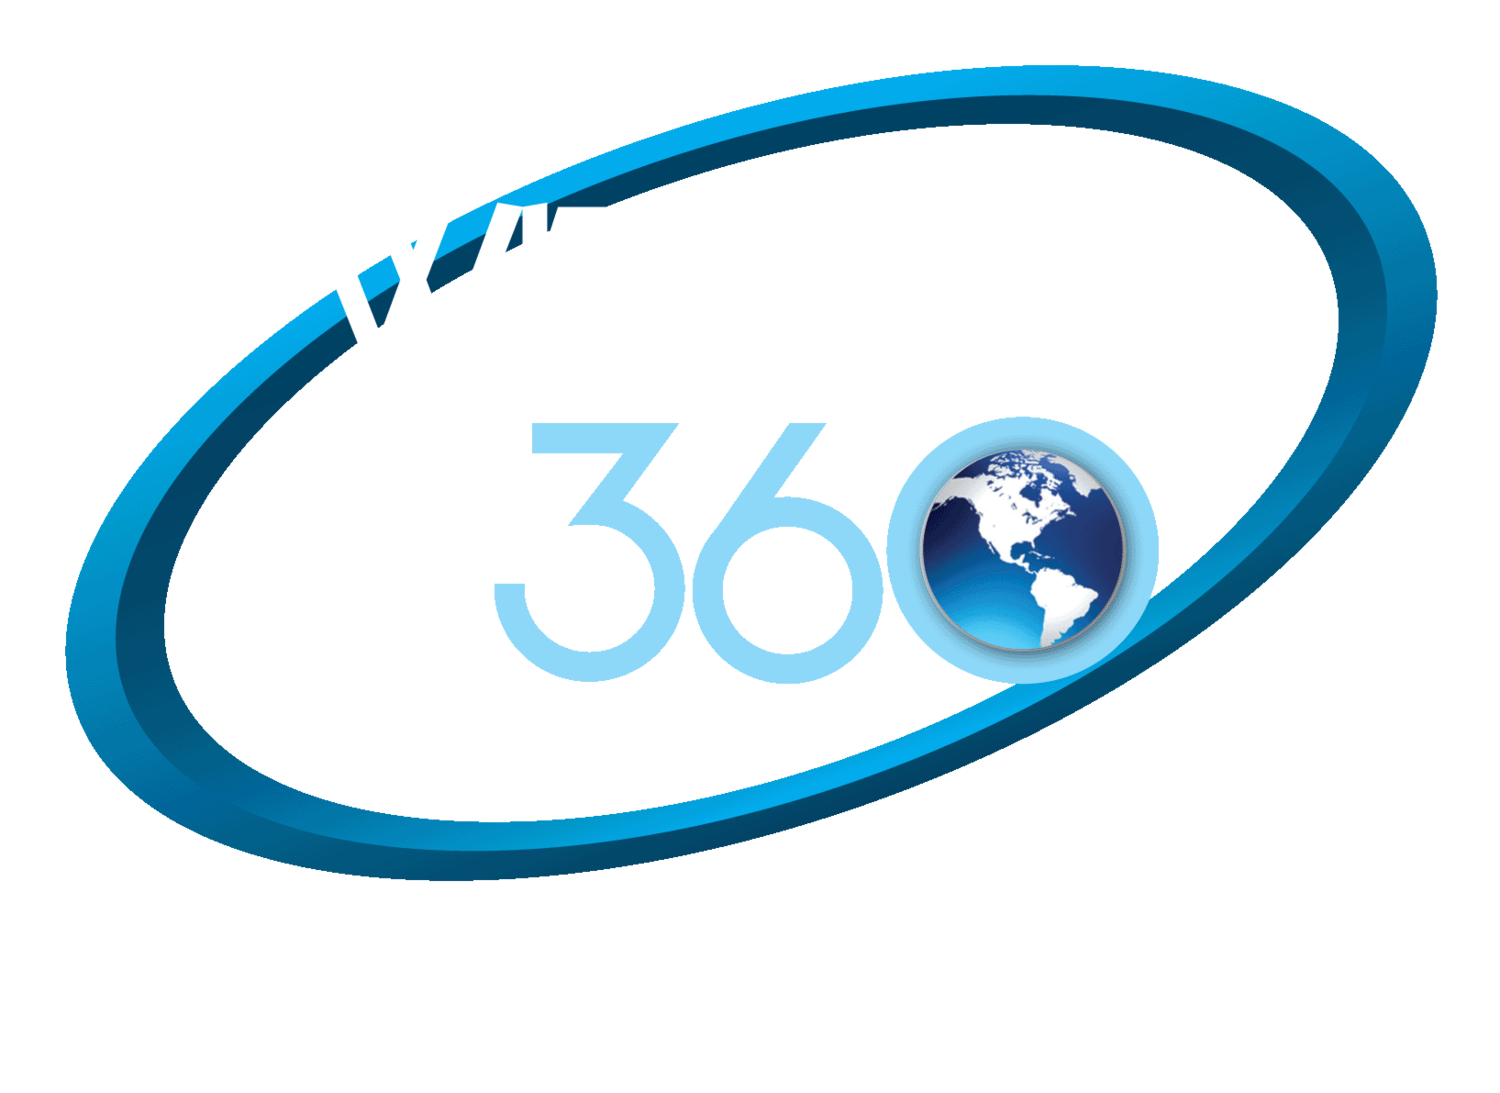 Witness360